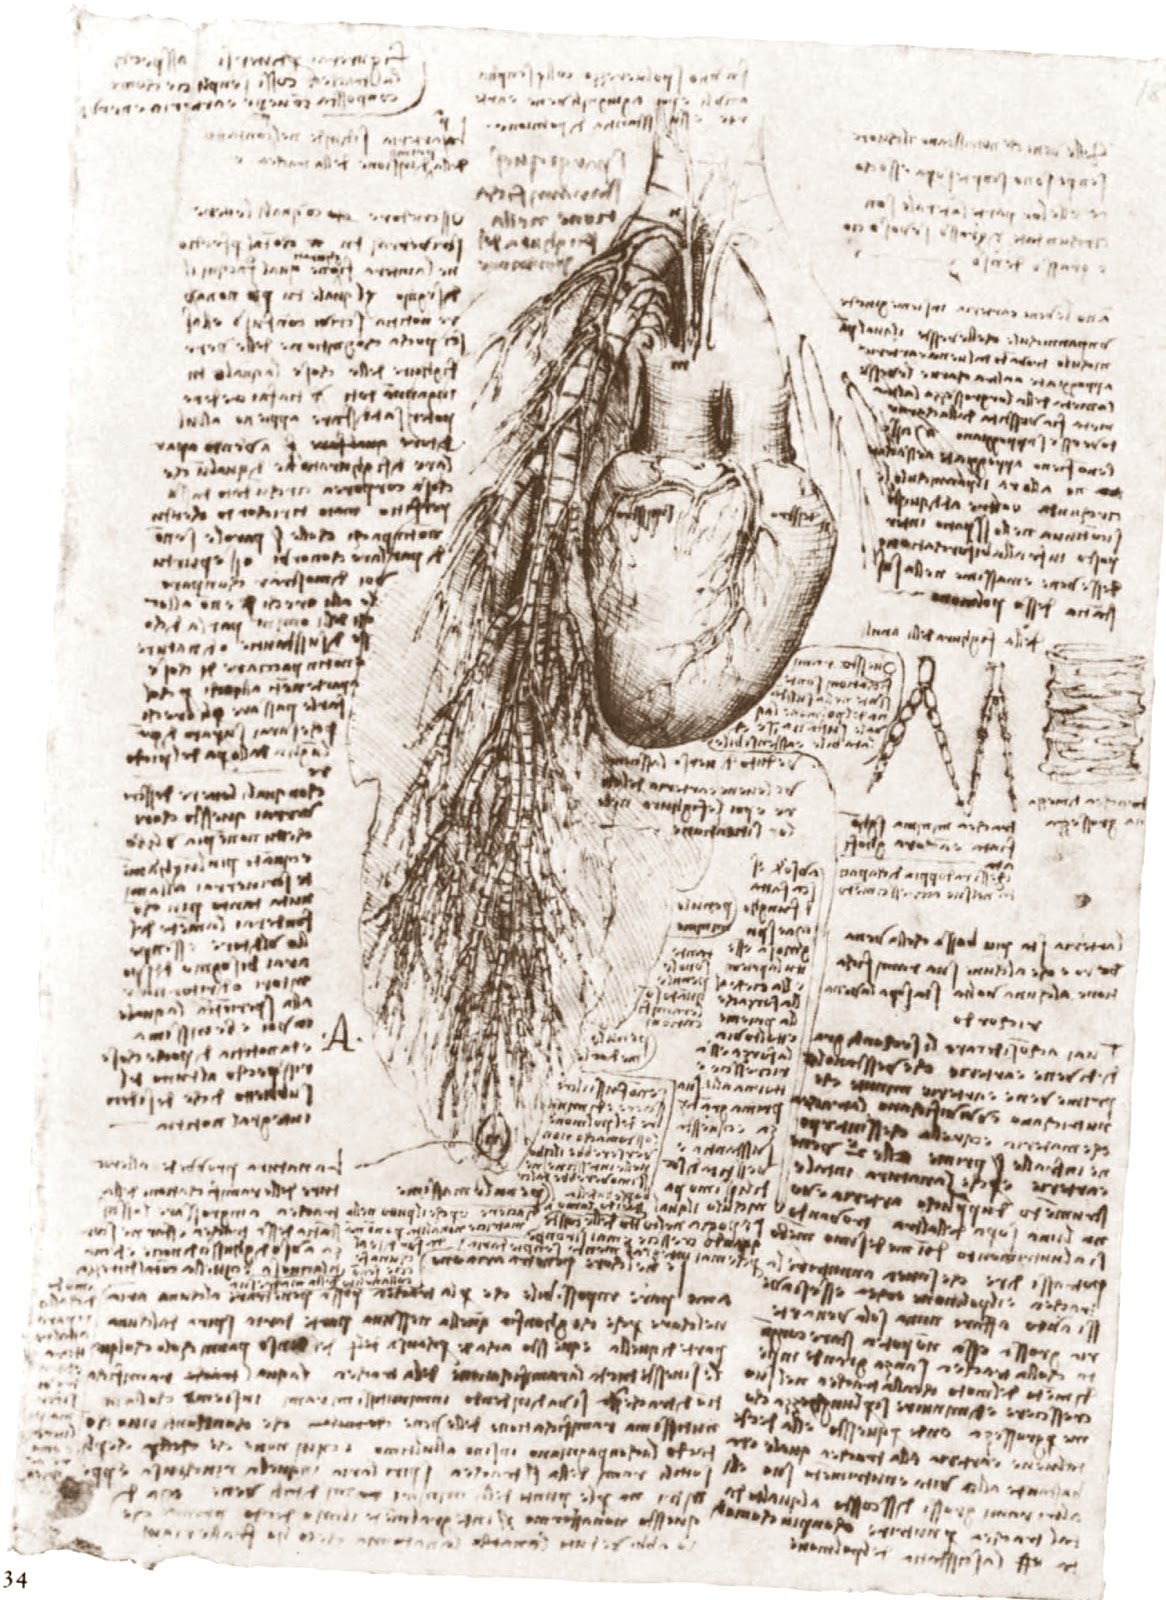 Leonardo+da+Vinci-1452-1519 (807).jpg